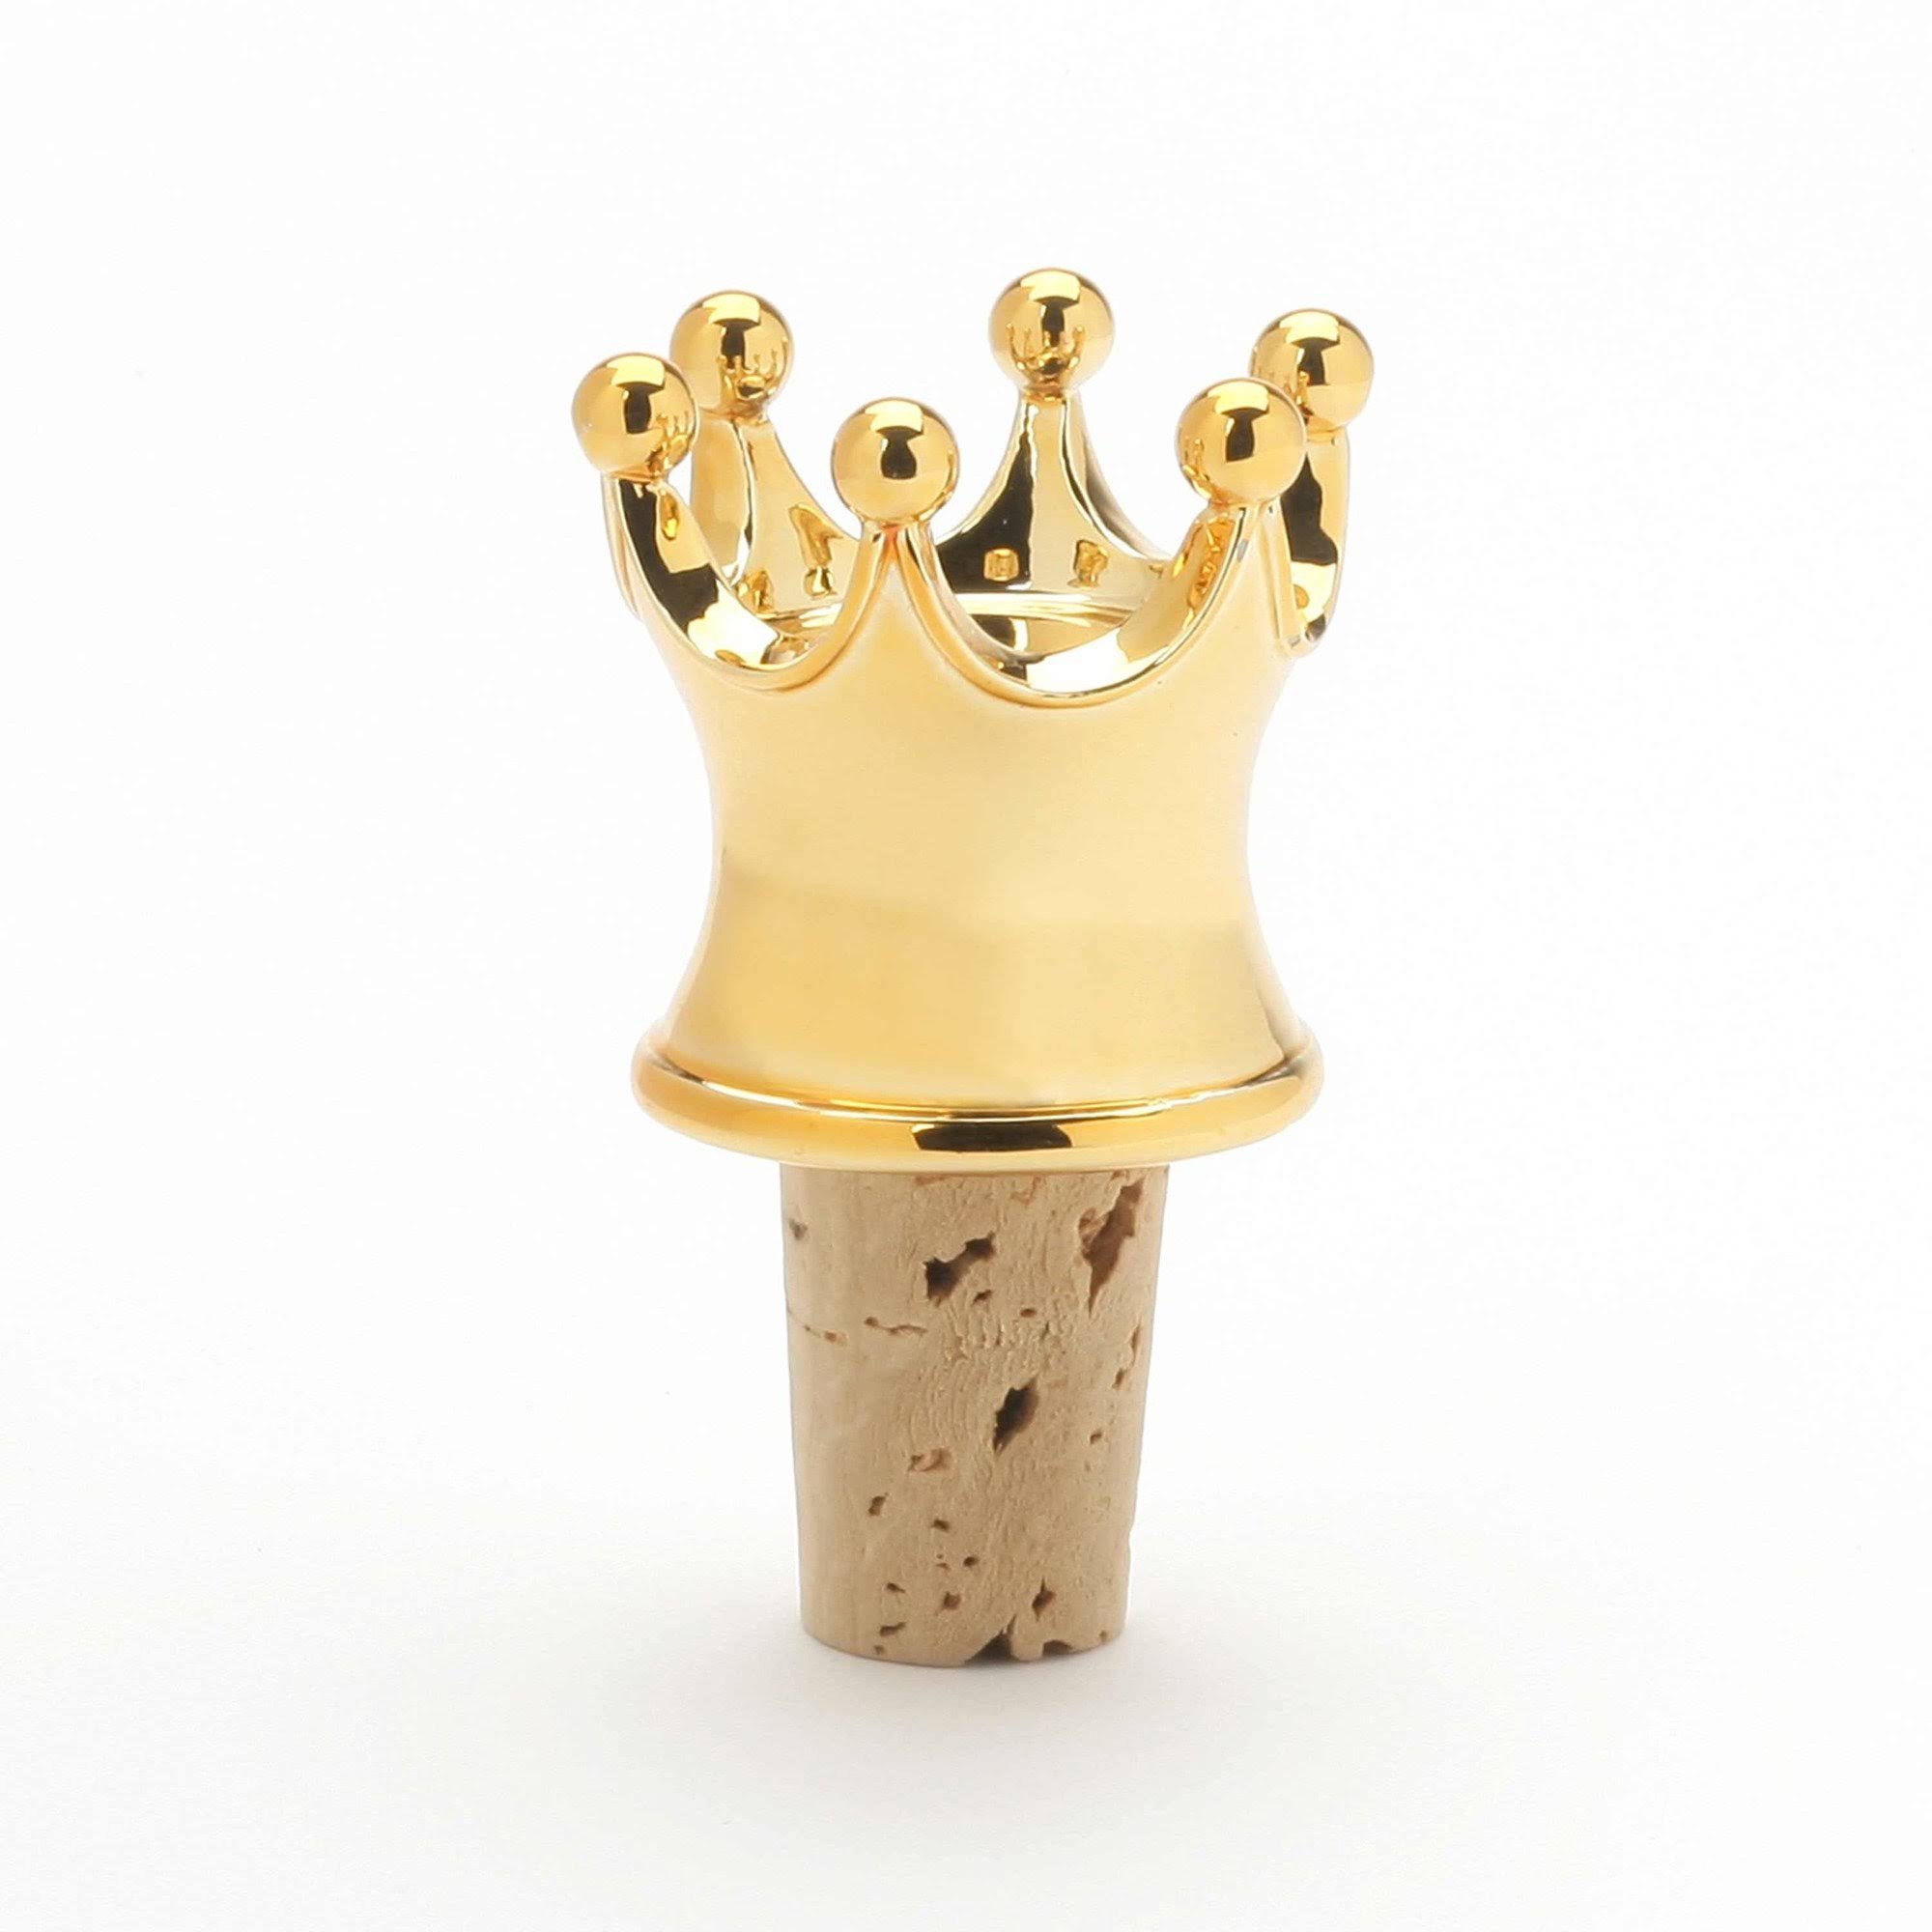 Gold Crown Bottle Stopper